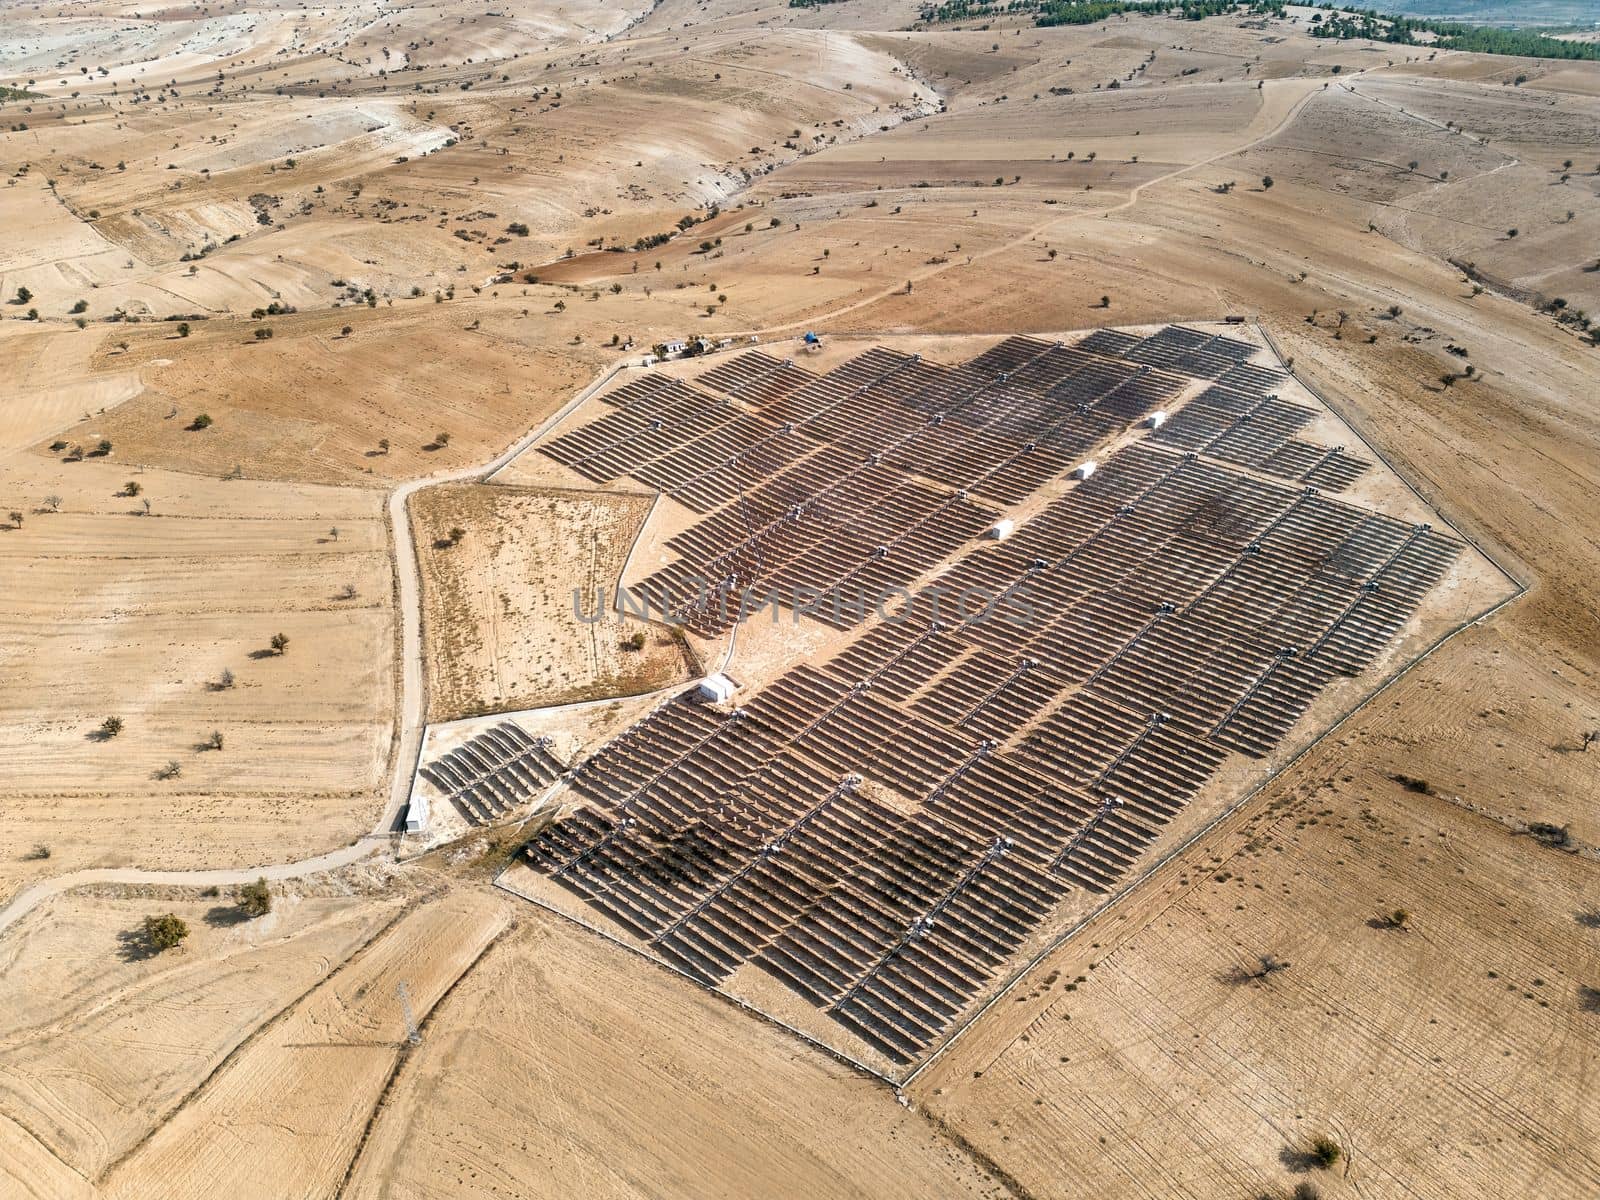 Solar panel field built on arid lands. Alternative green energy concept by Sonat